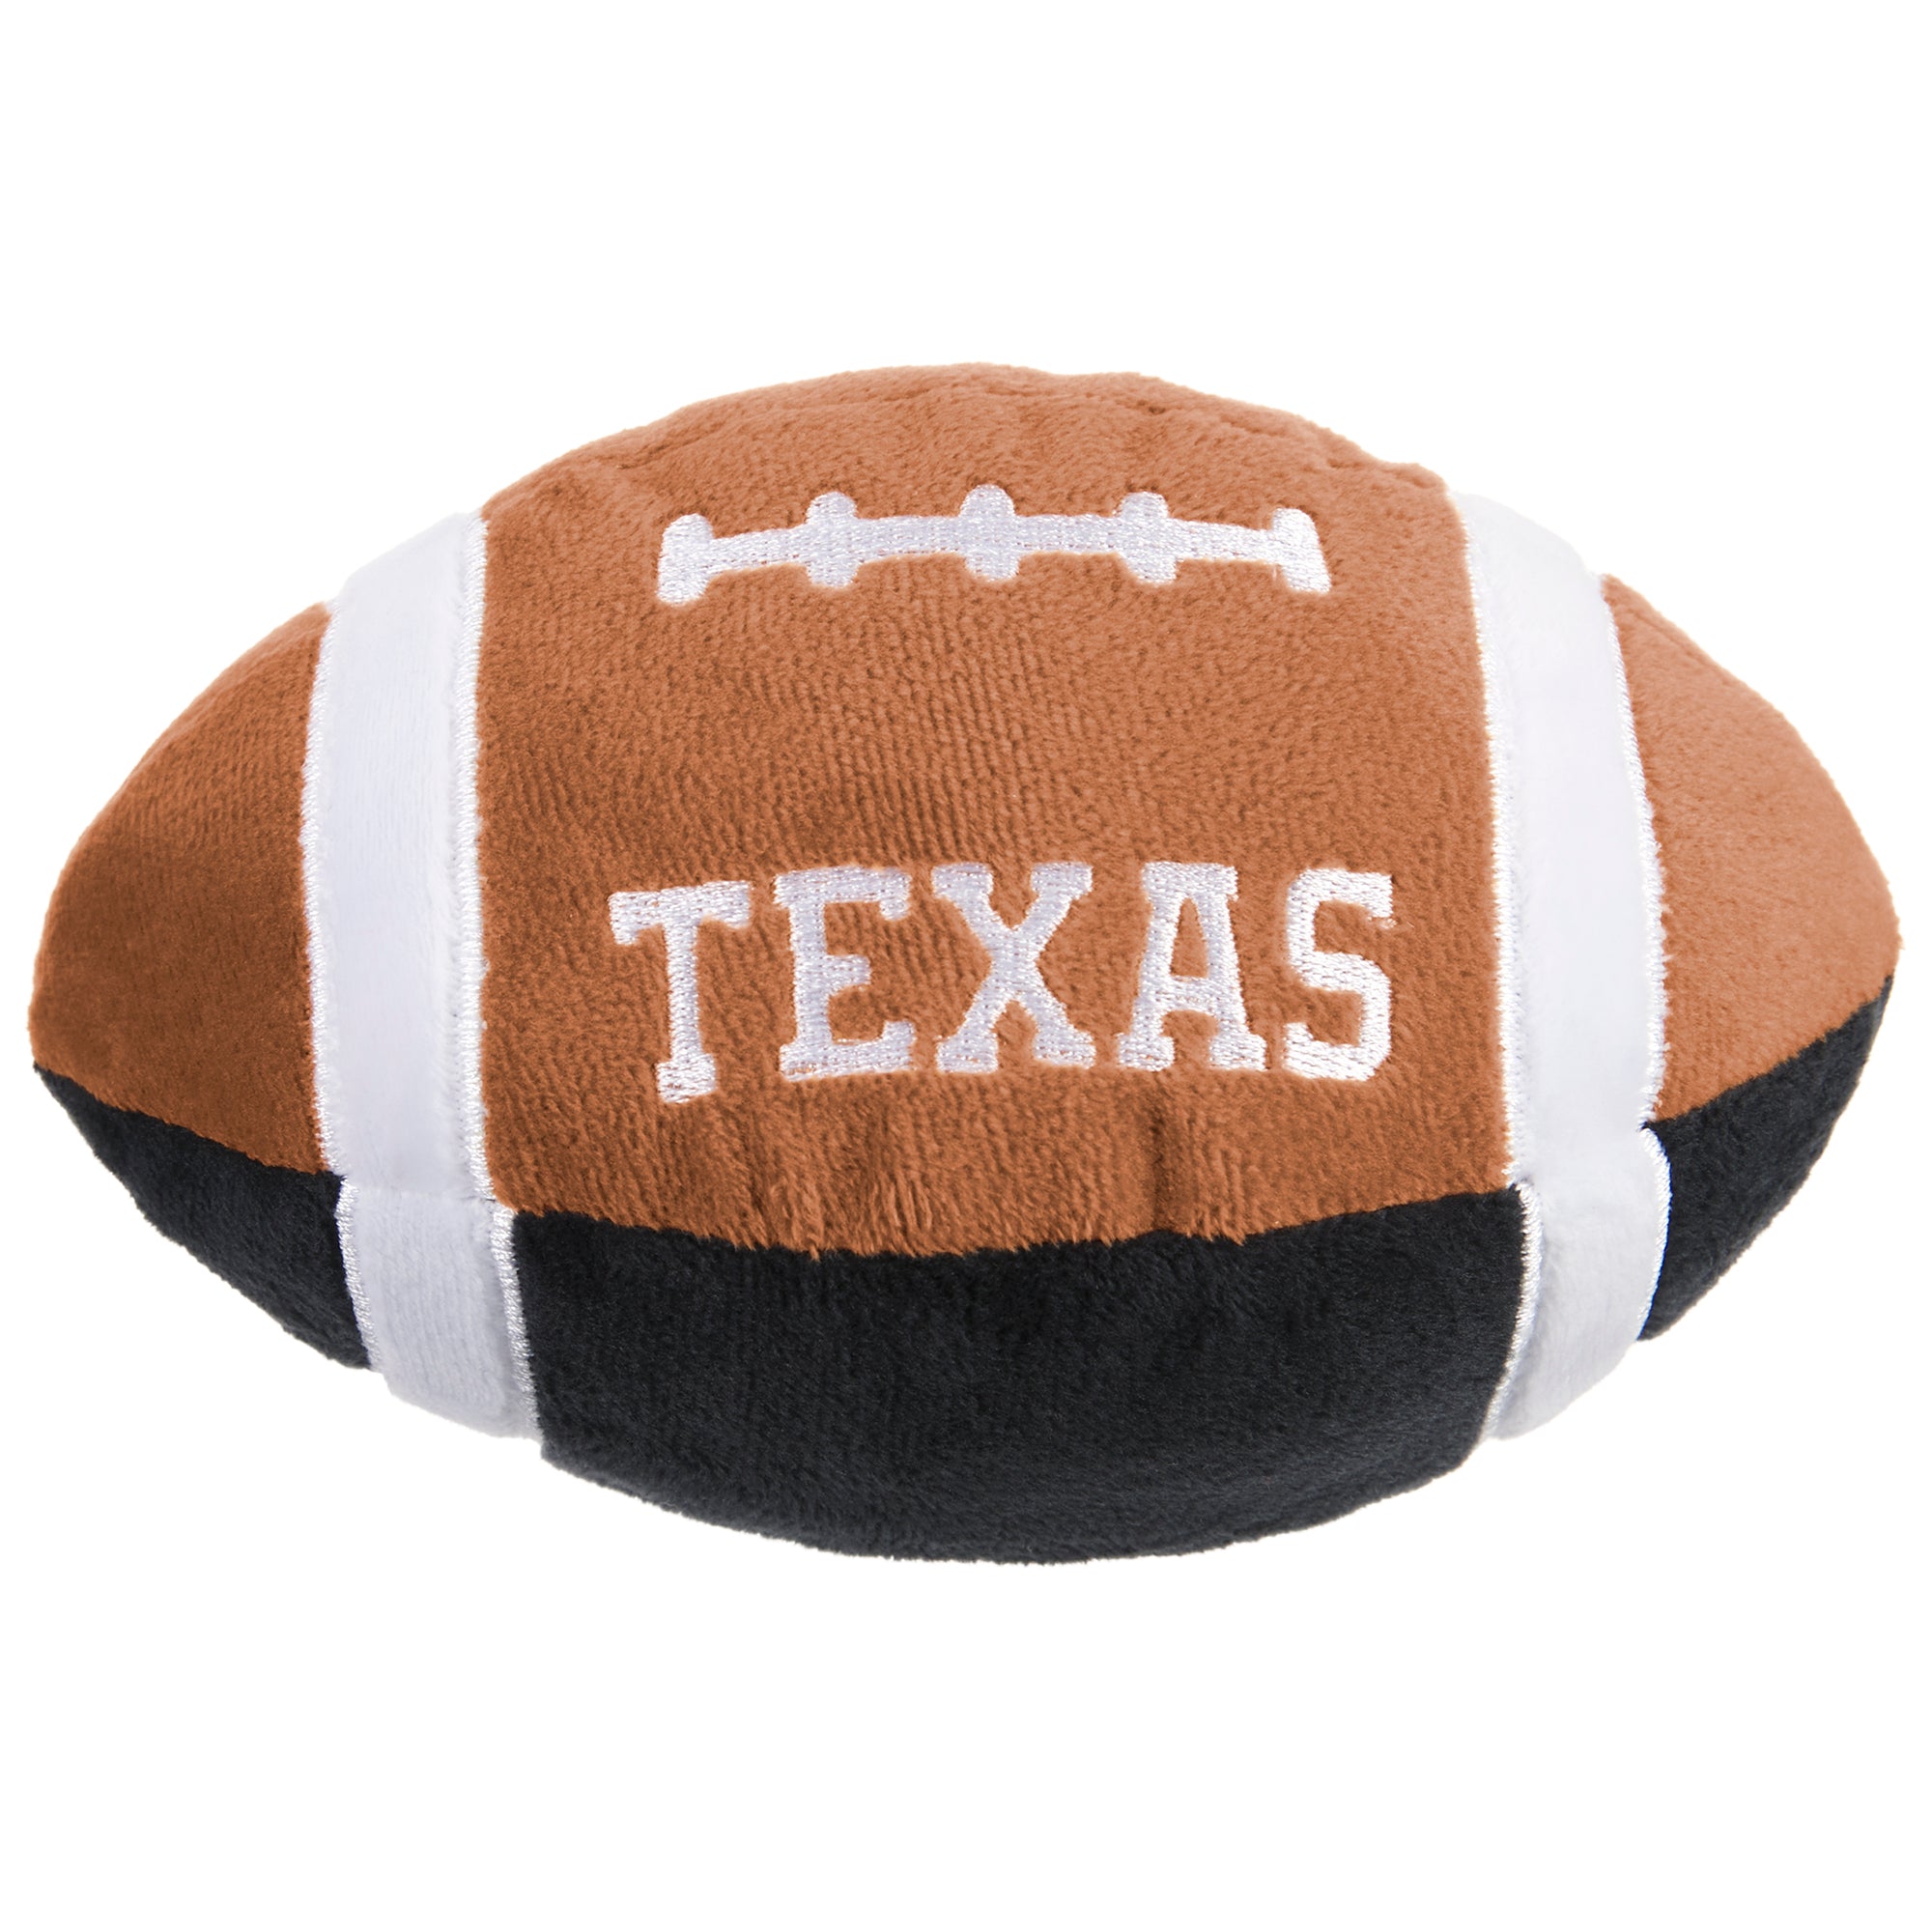 Texas Fetchin' Football Toy